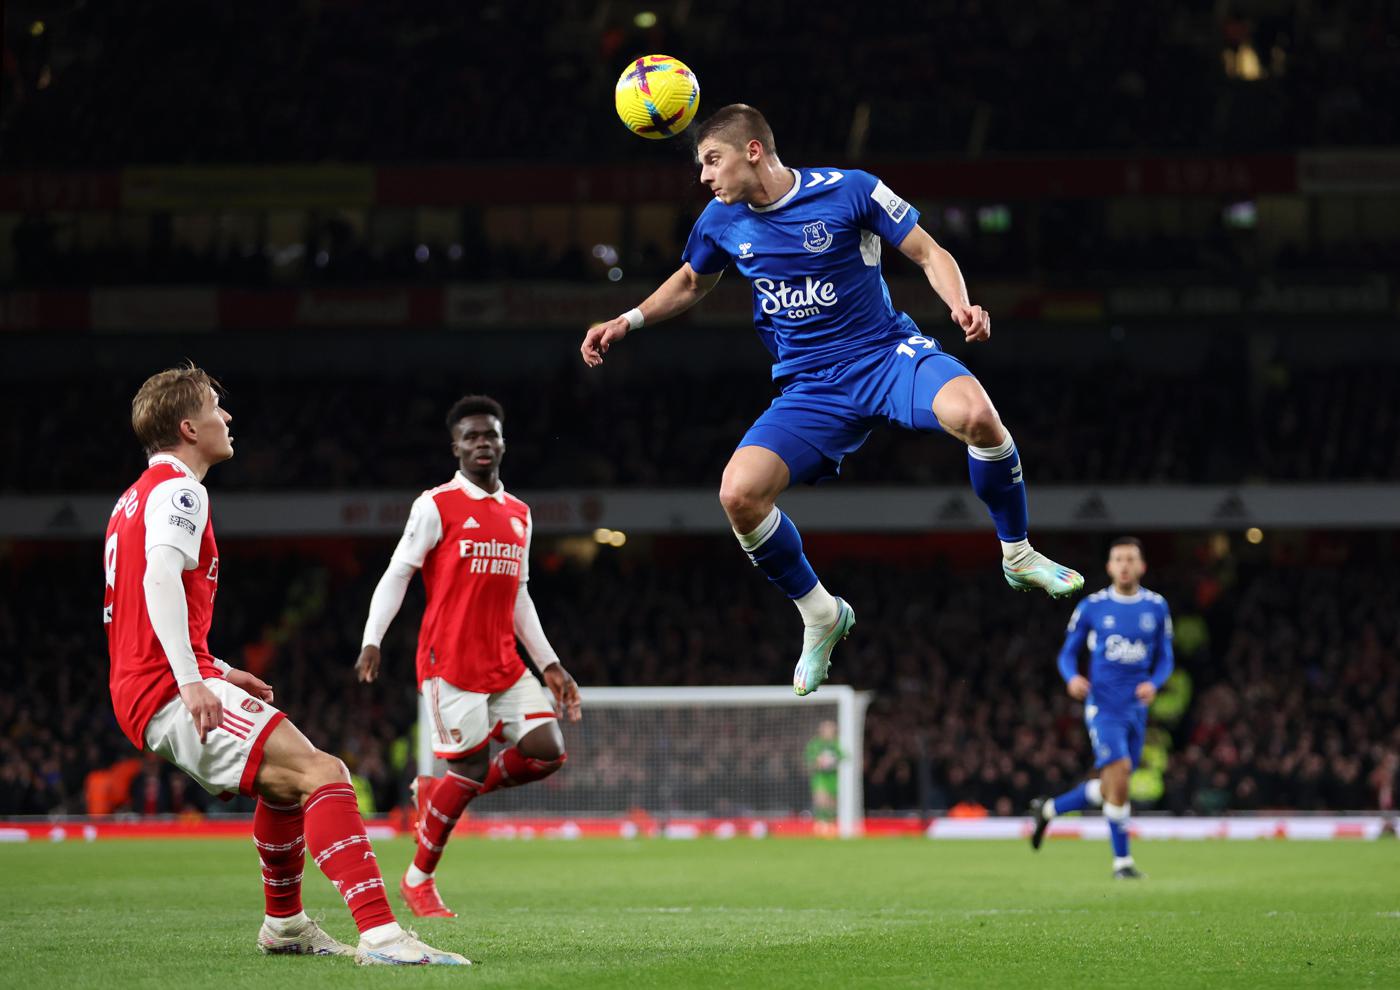 Arsenal vs Everton - 4-0. English Championship, 7th round. Match Review, Statistics